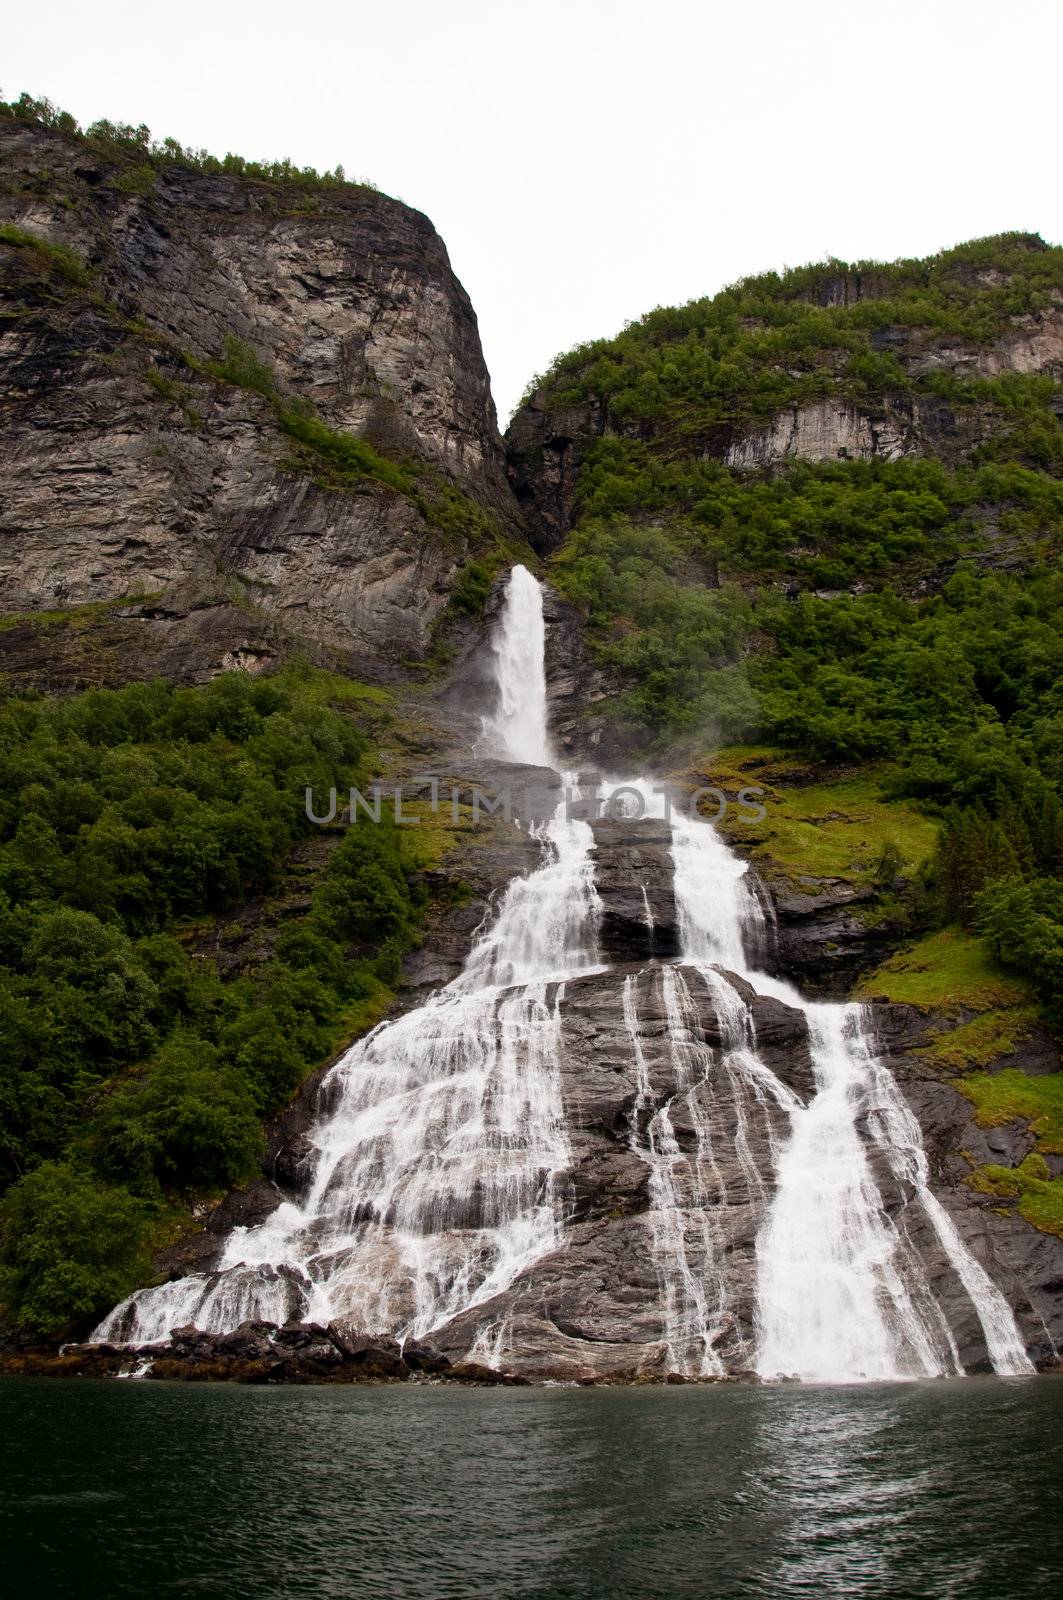 Big waterfall at geirangerfjord, Norway